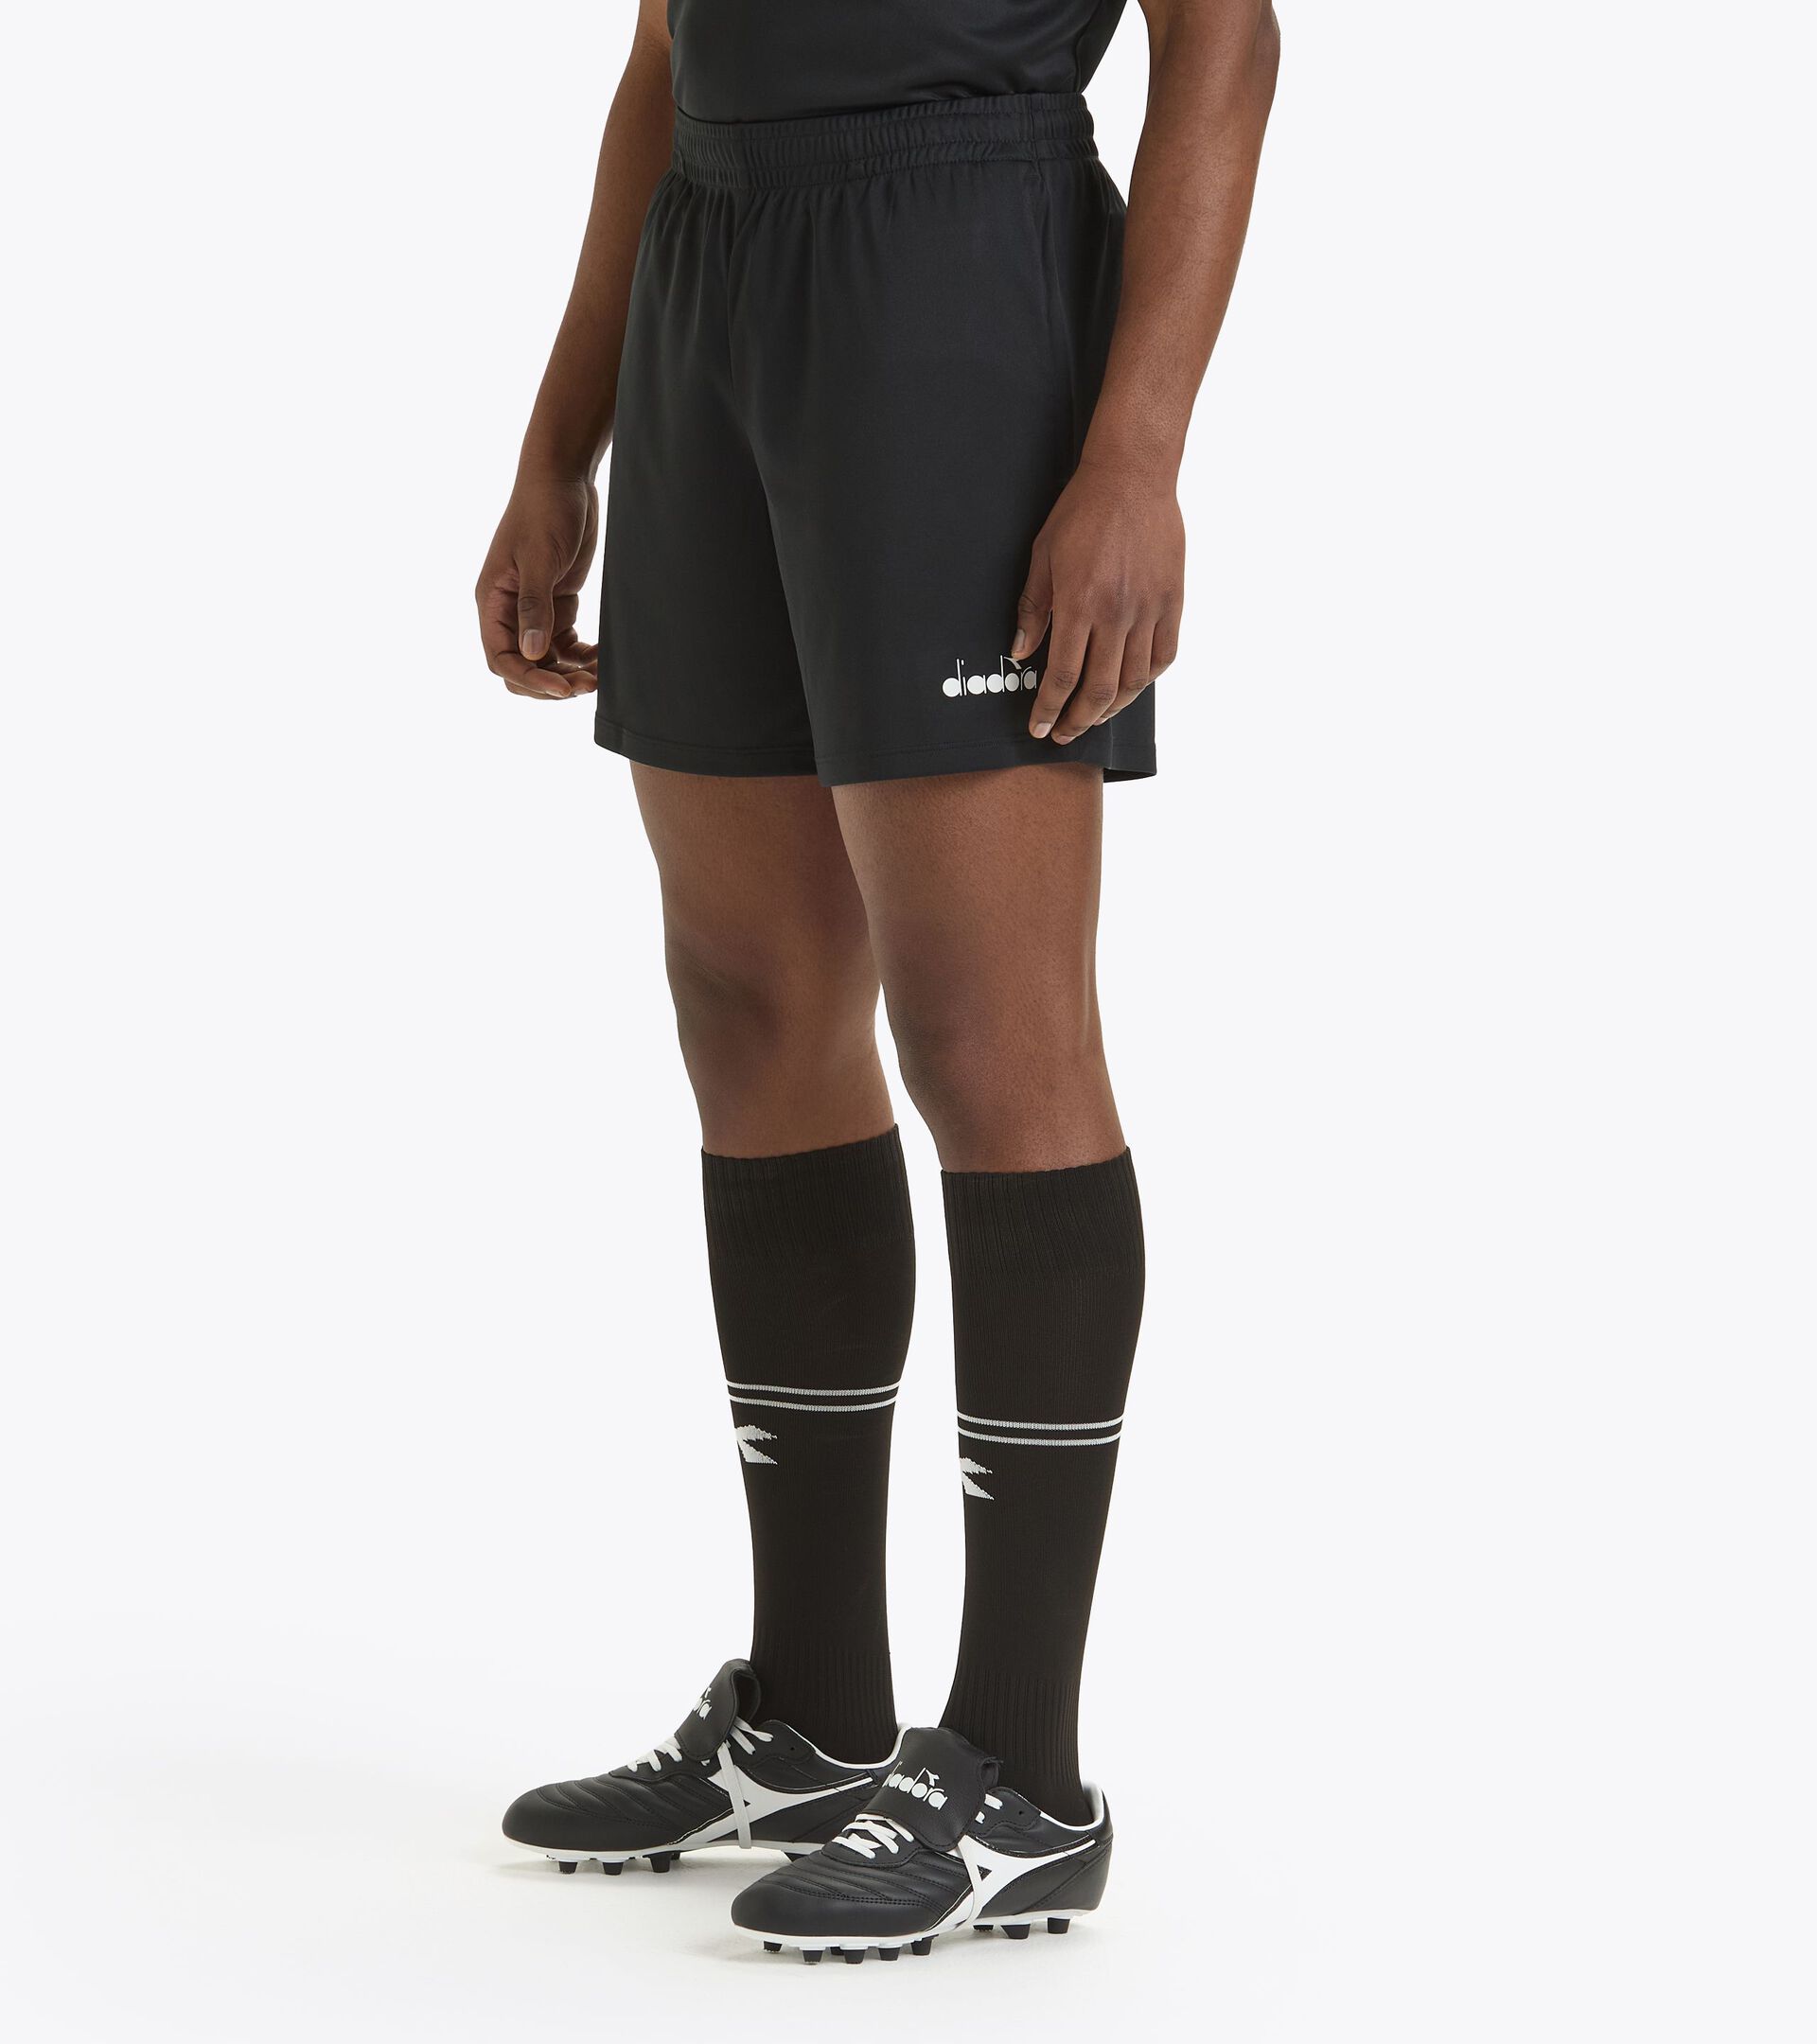 Bermuda shorts for calcio trainings - Unisex TRAINING SHORT SCUDETTO BLACK - Diadora